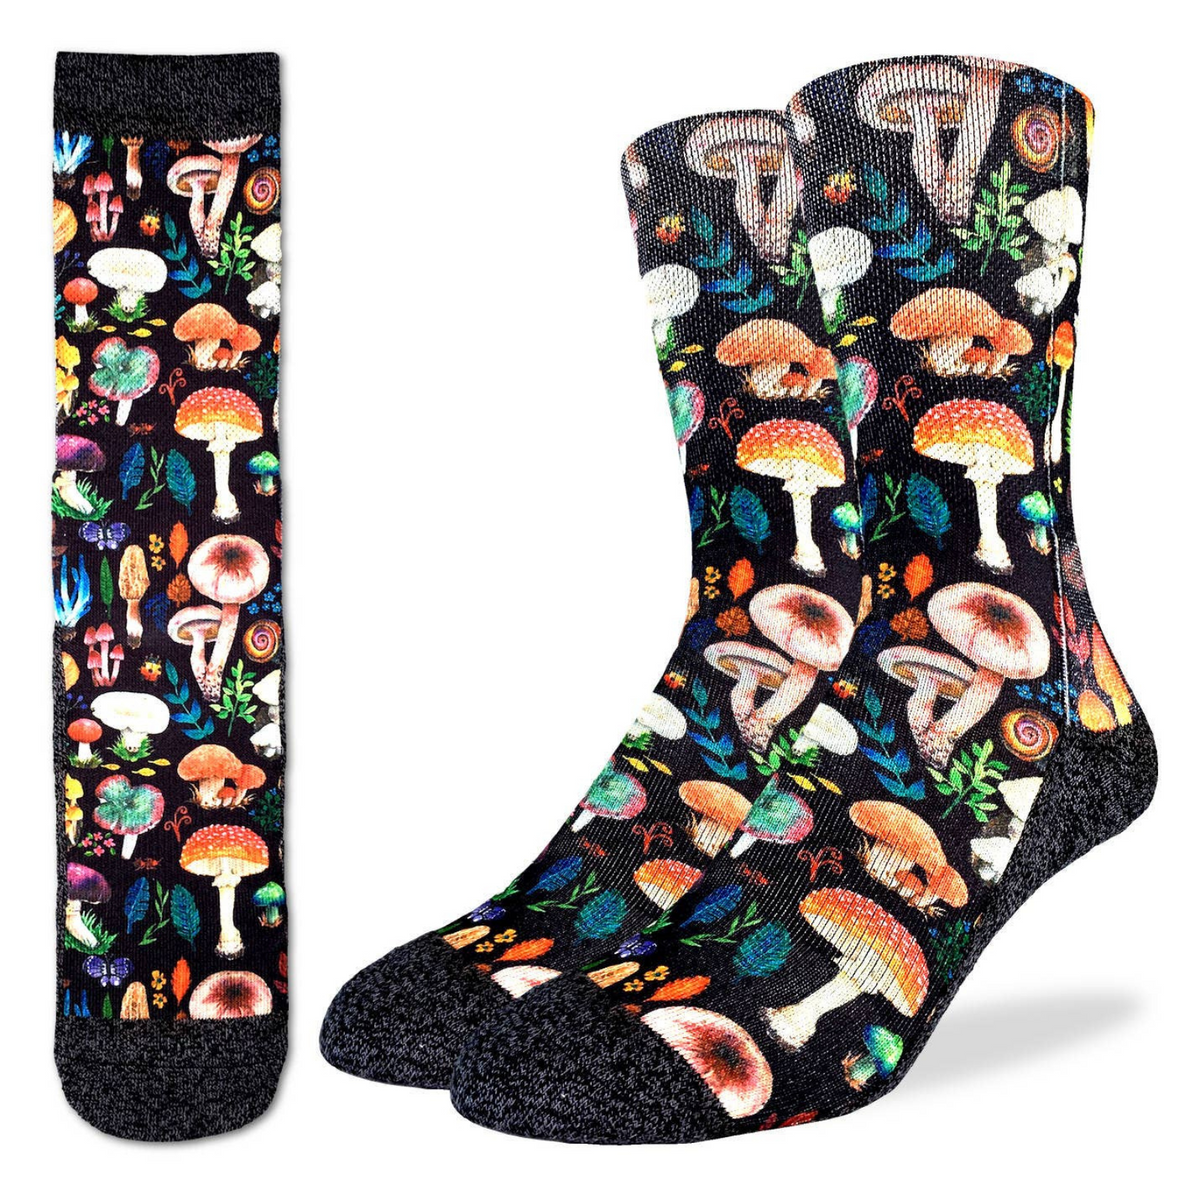 Good Luck Sock Mushroom men&#39;s socks featuring different types of mushrooms on black background on display